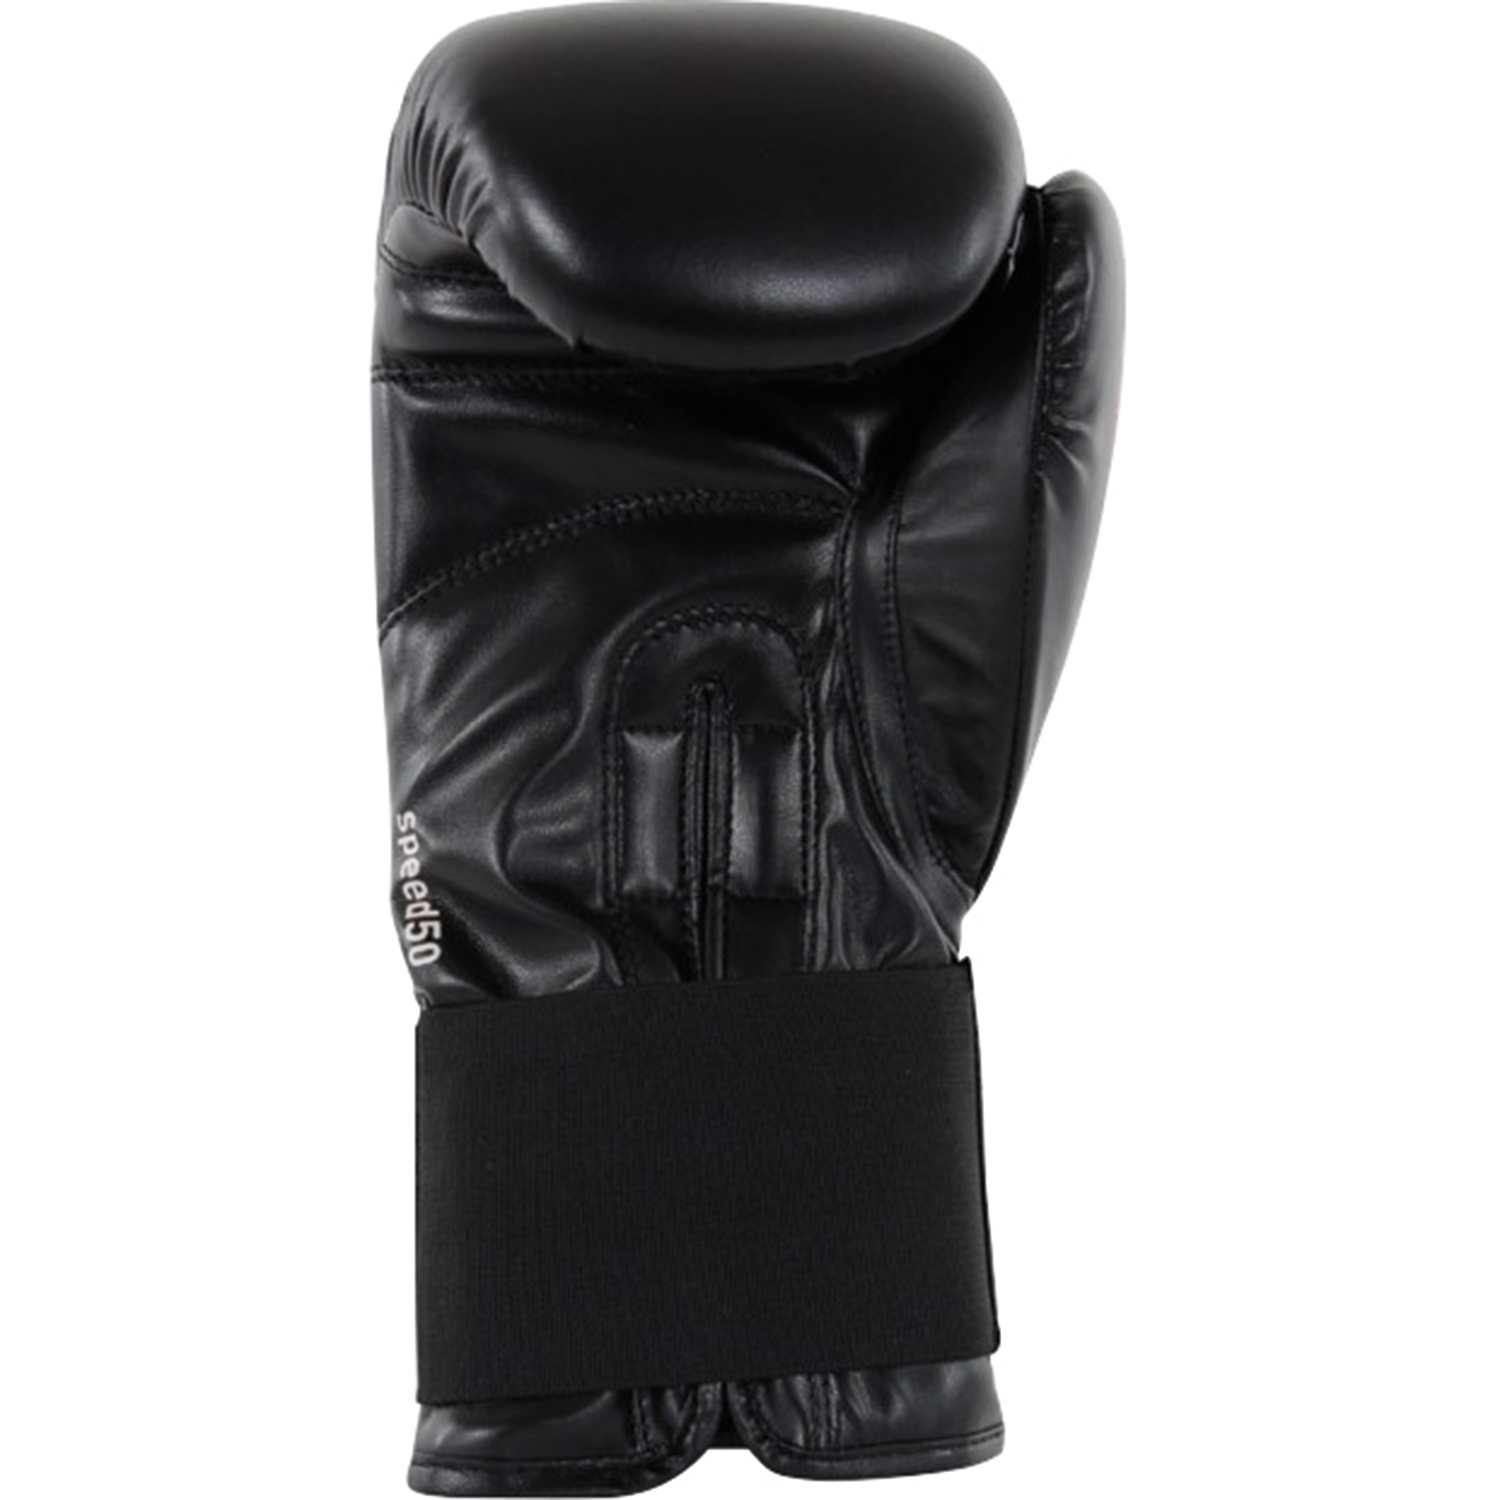 Adidas Speed 50 boxing gloves black/white 12 oz